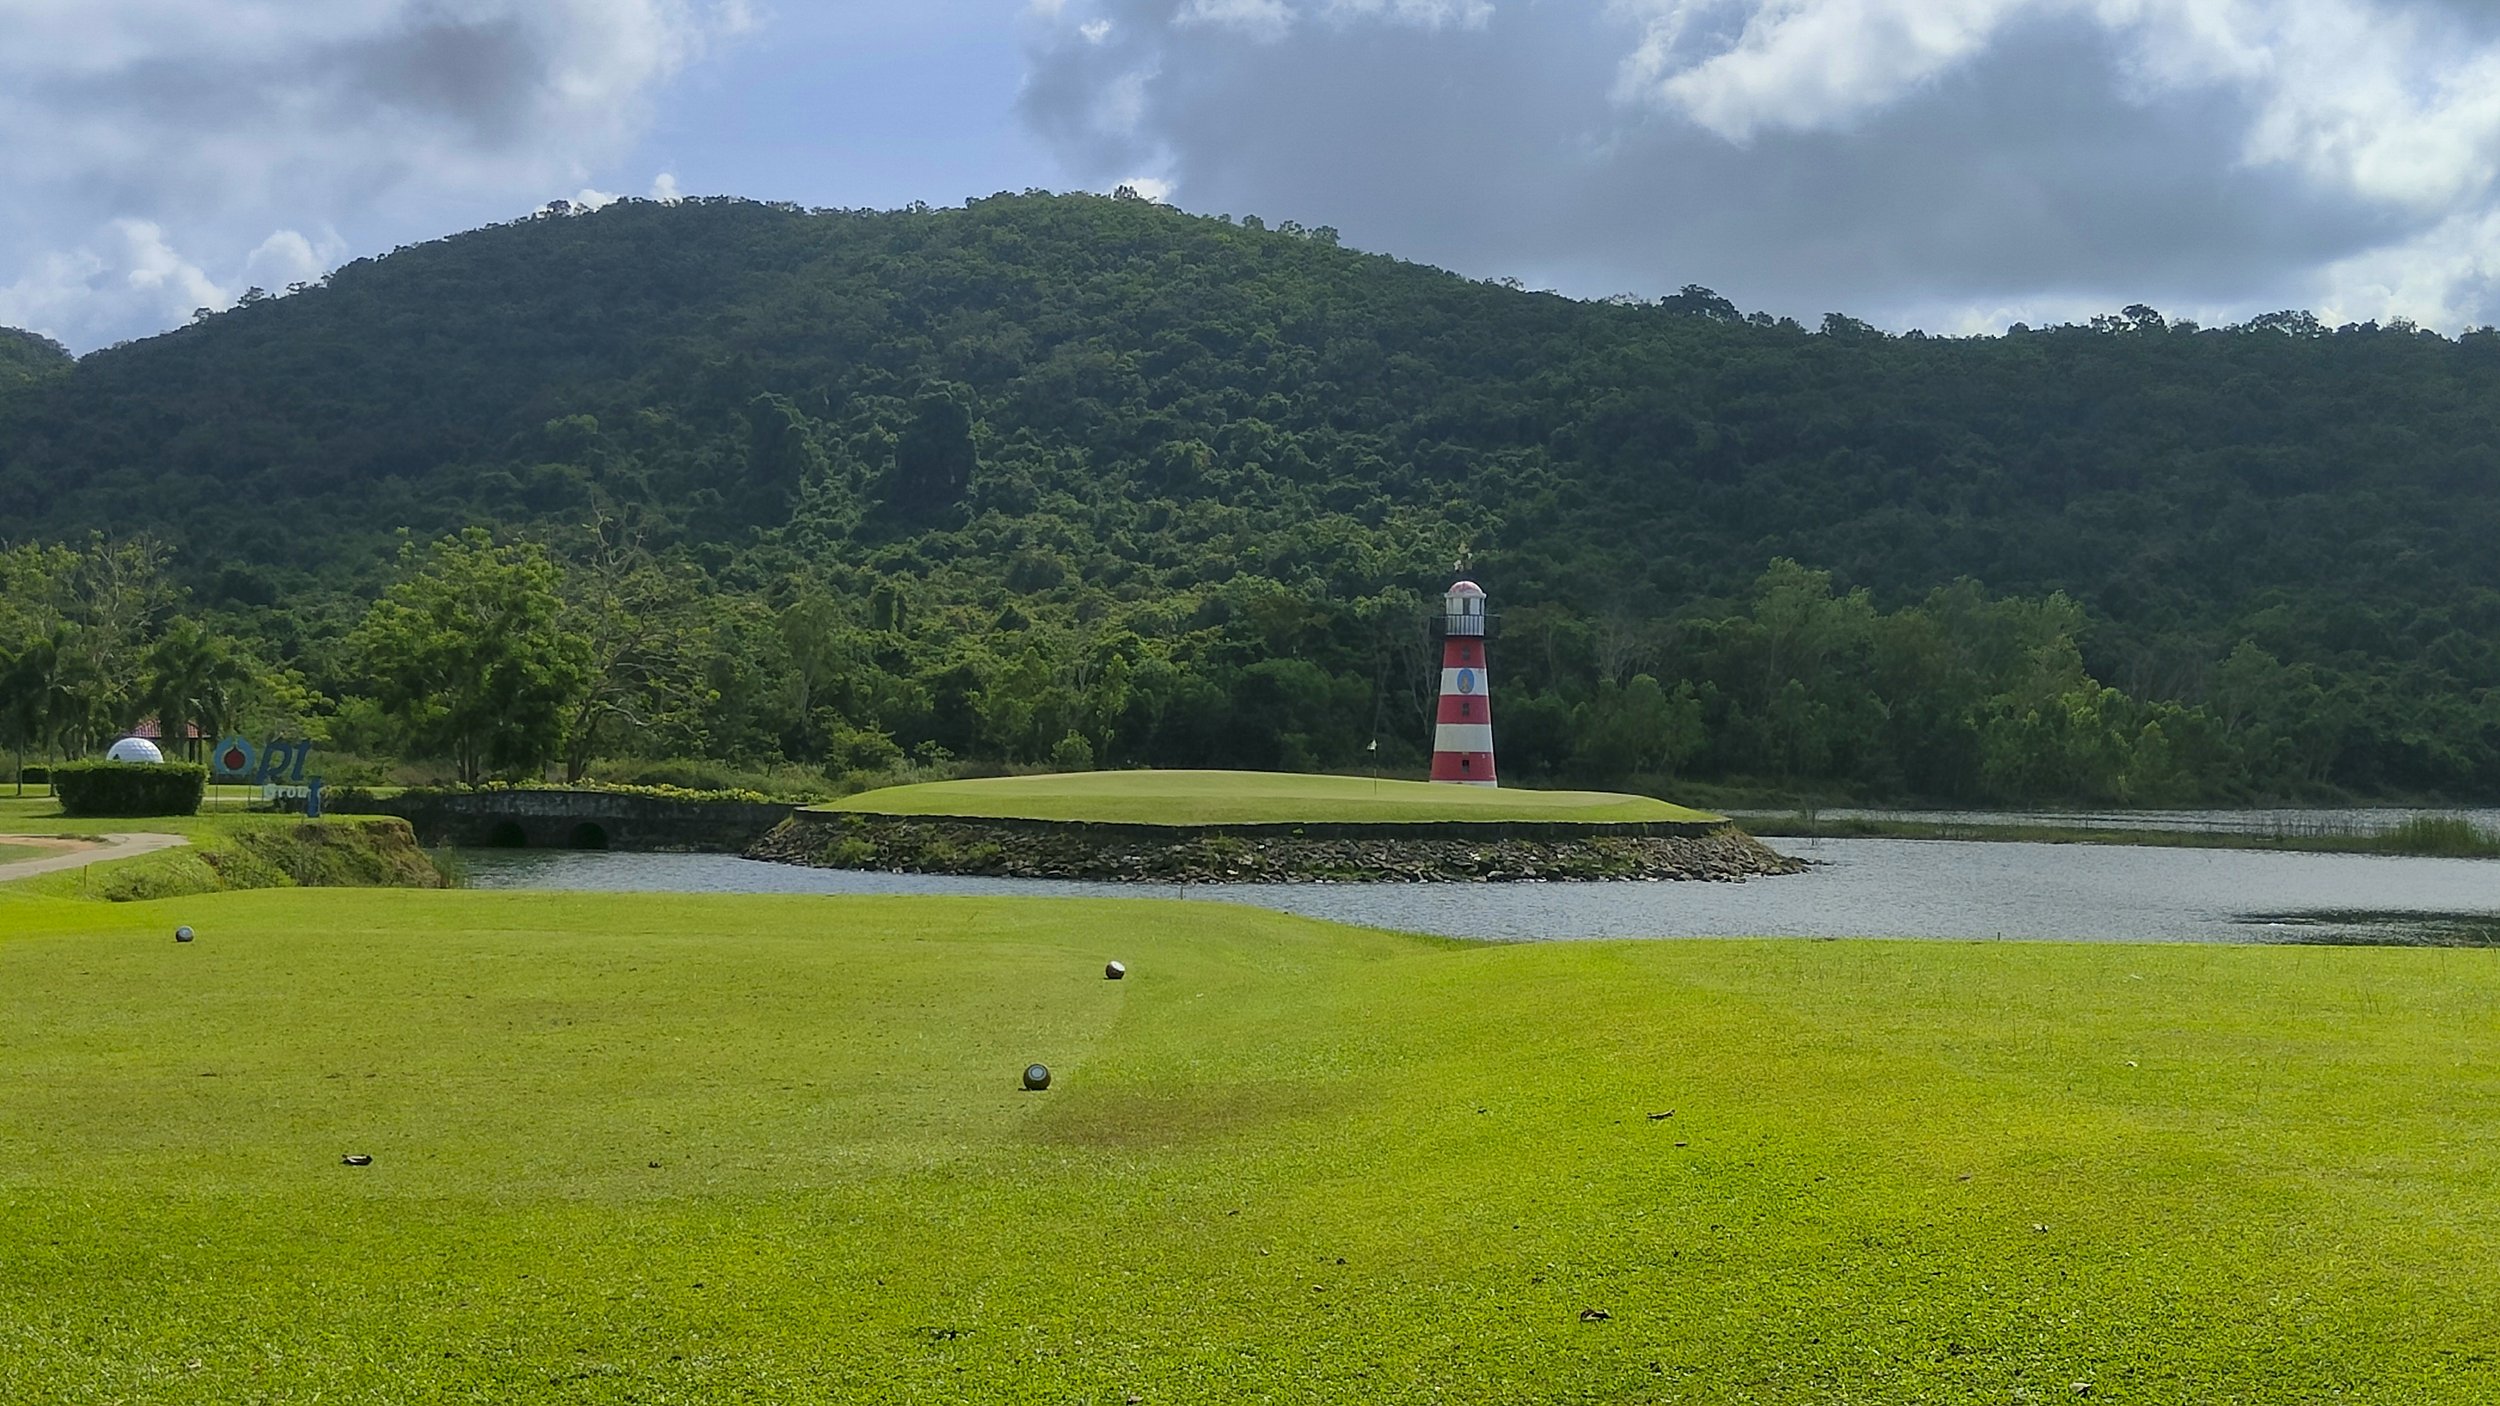 Plutaluang Royal Thai Navy Golf Course (36 holes)